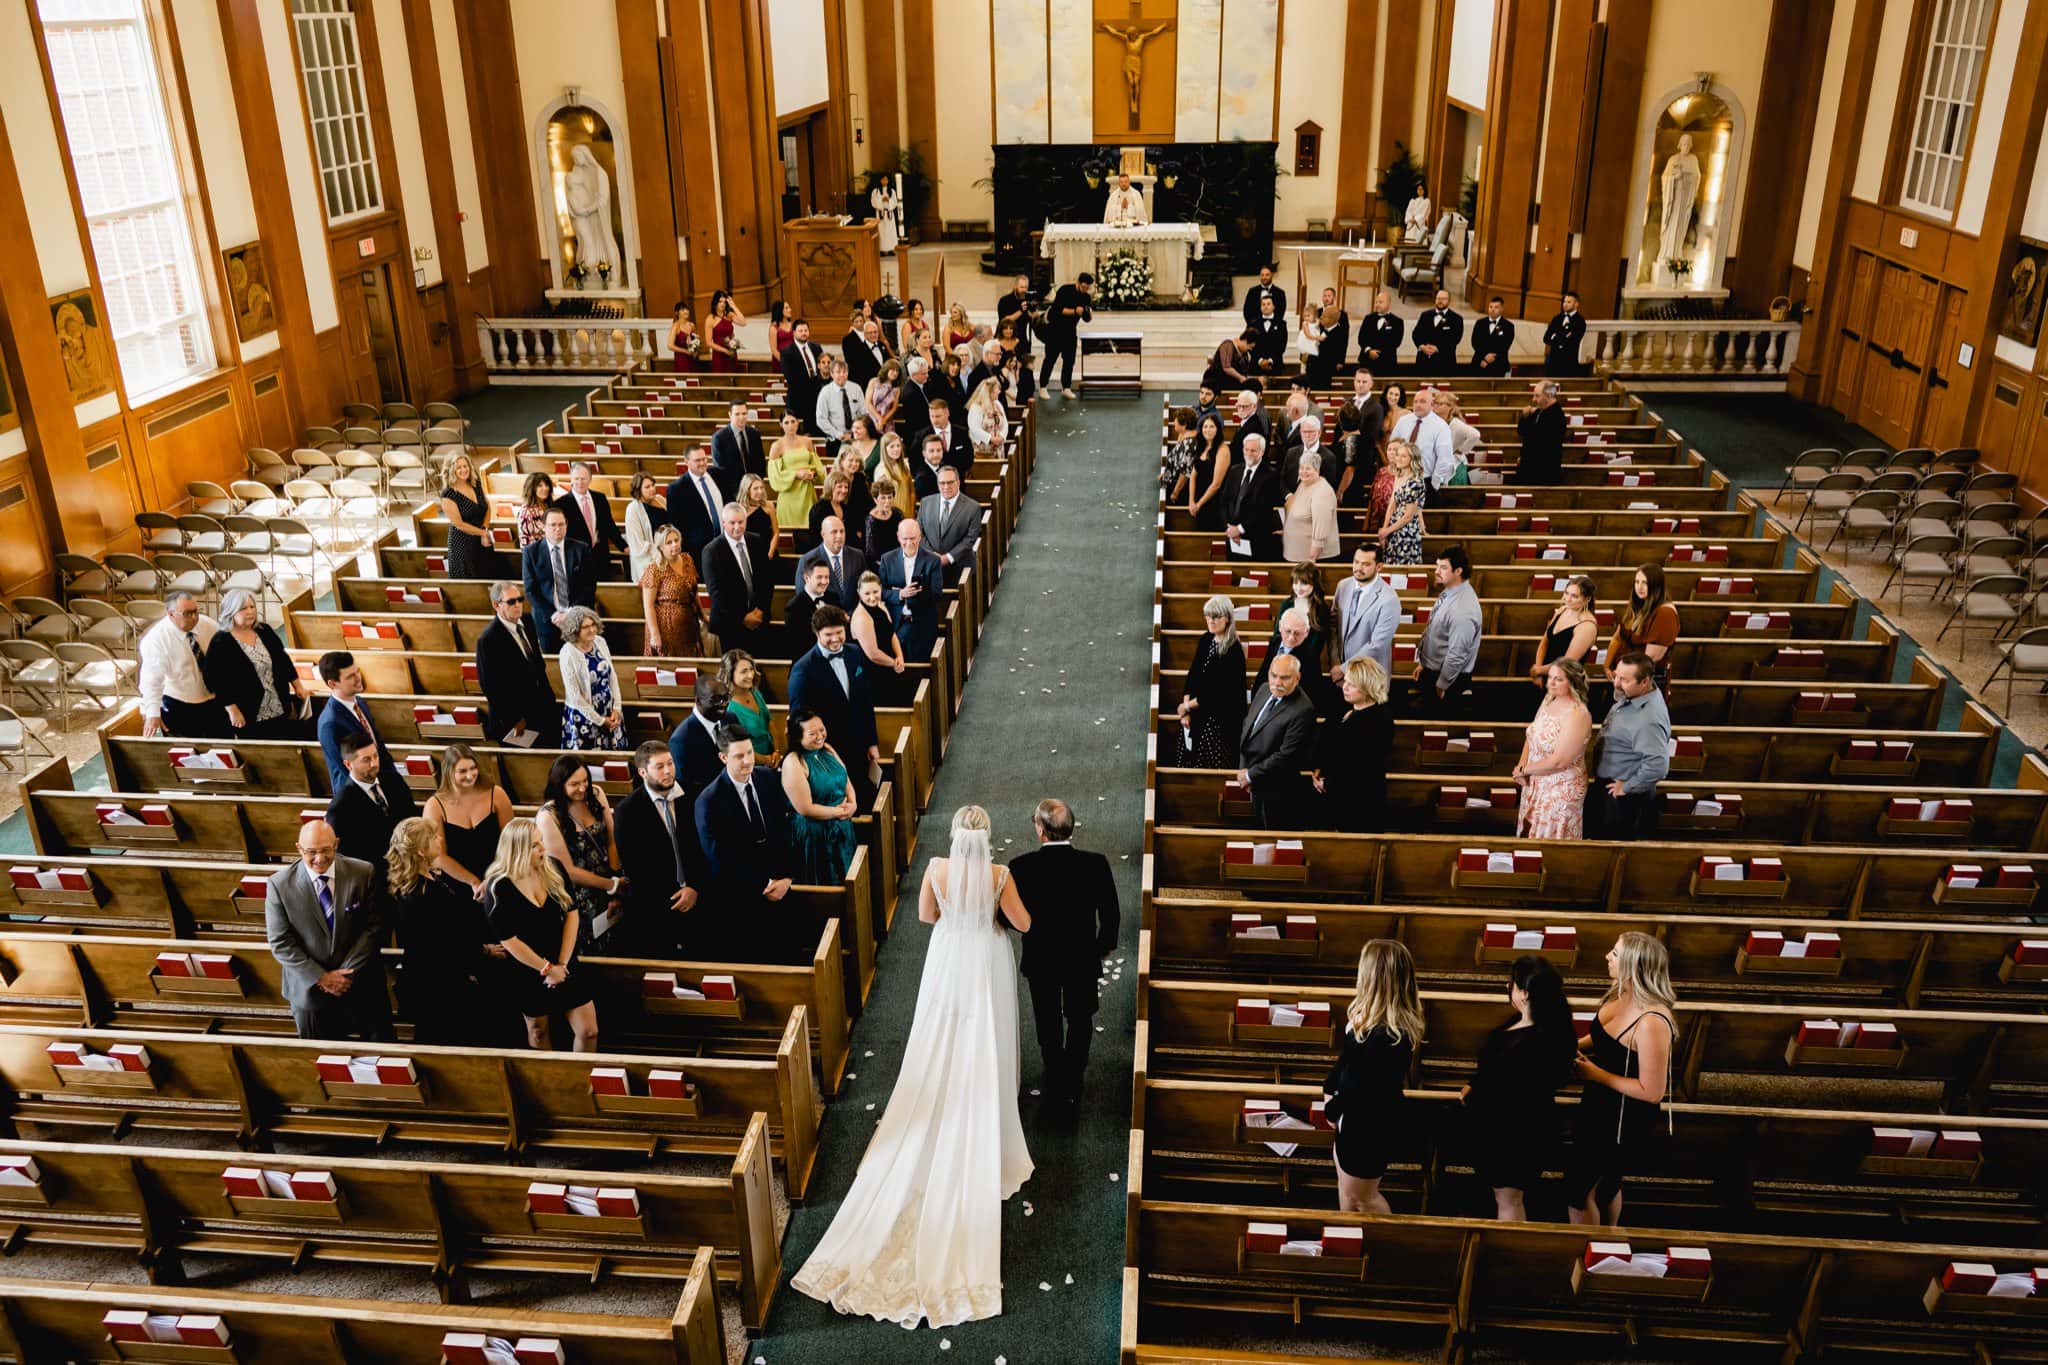 stunning church ceremony photos